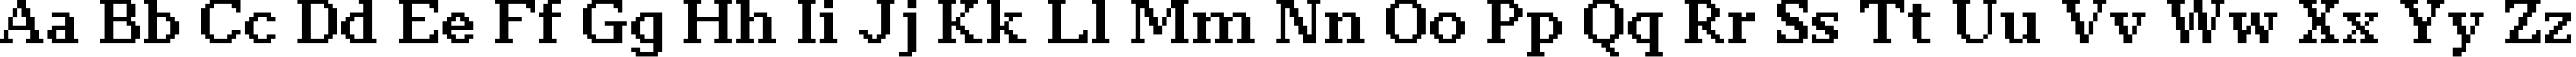 Пример написания английского алфавита шрифтом classic 10_65